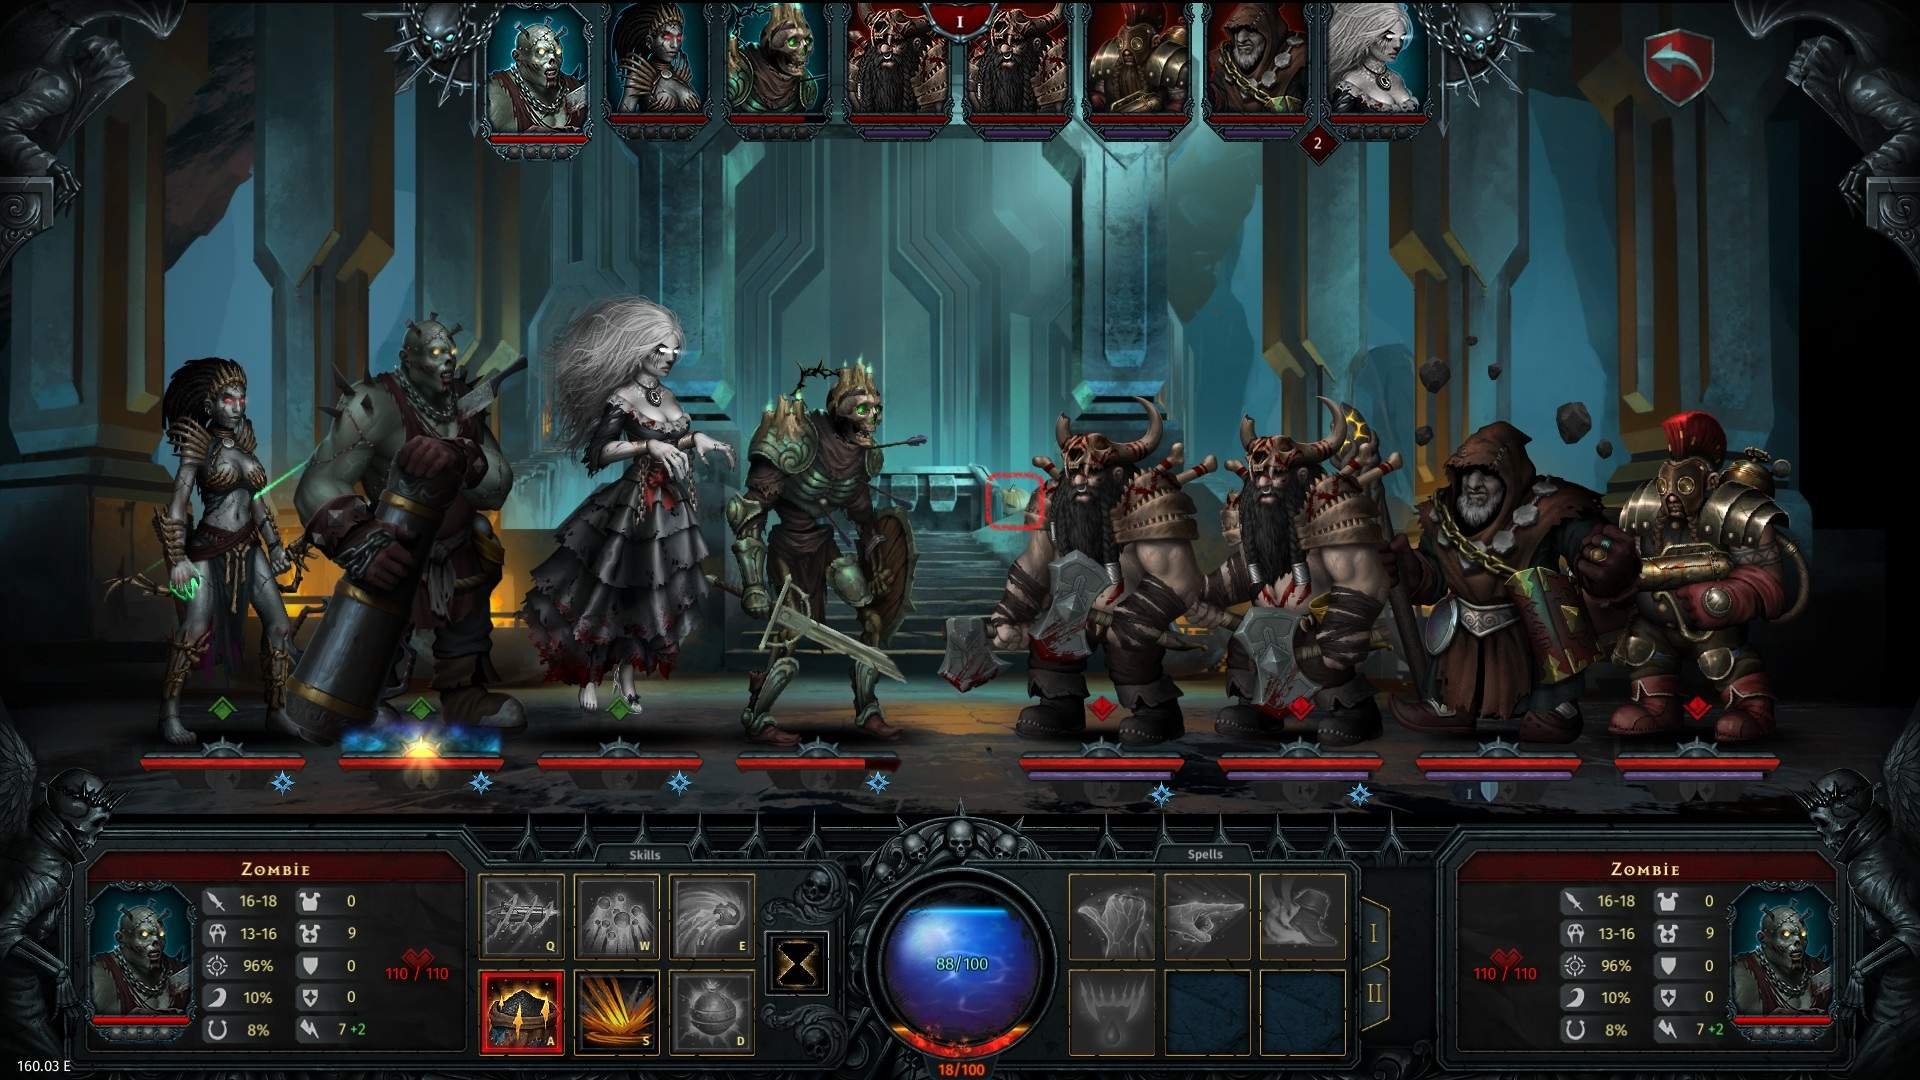 Скриншот 3 к игре Iratus Necromancer Edition (2019) PC | Лицензия